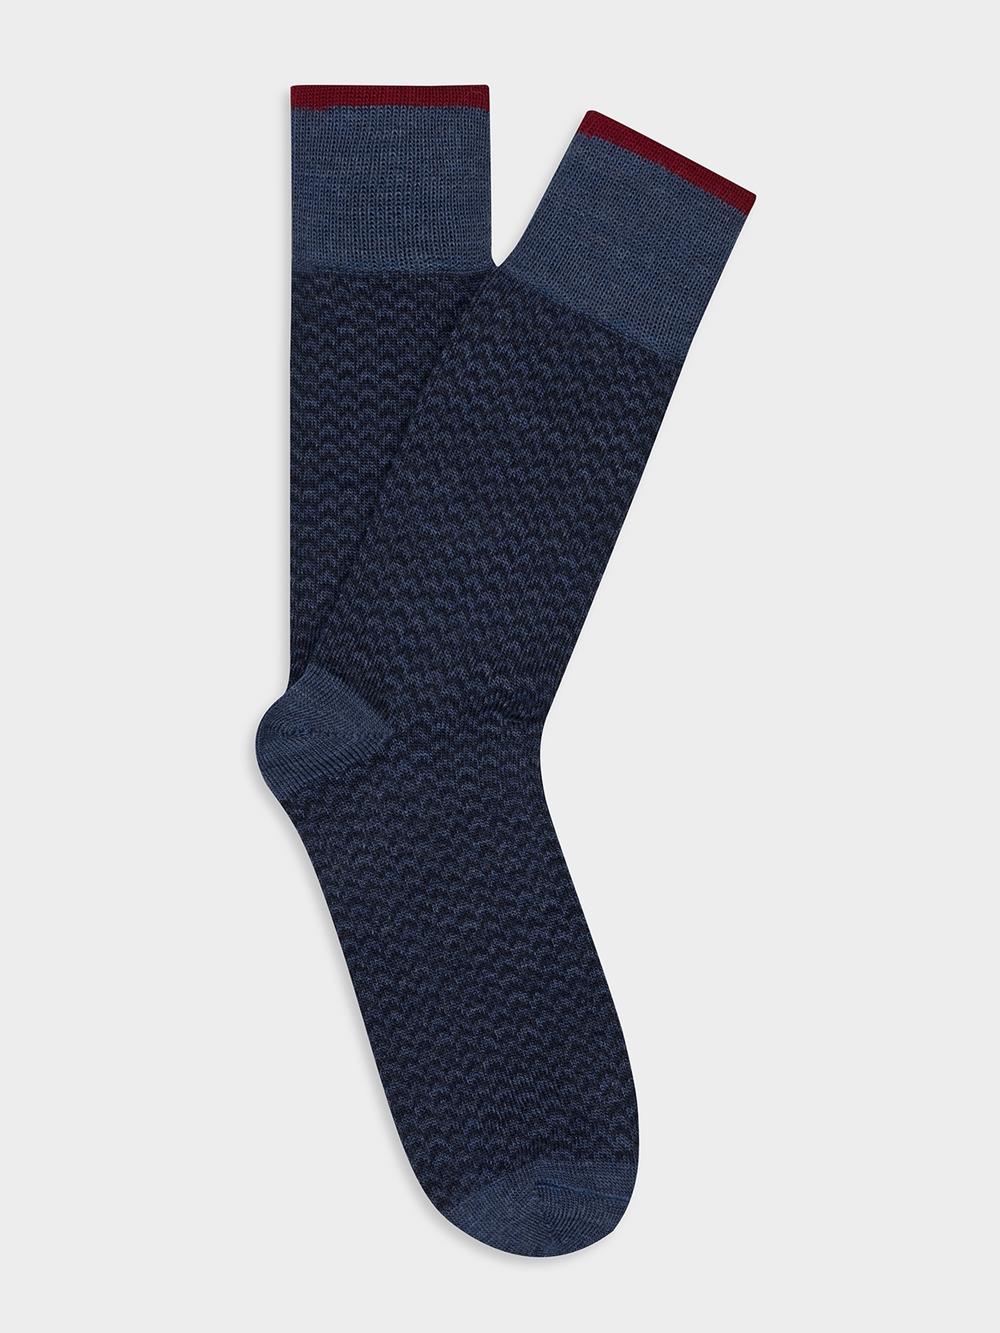 Bauer socks in blue herringbone pattern